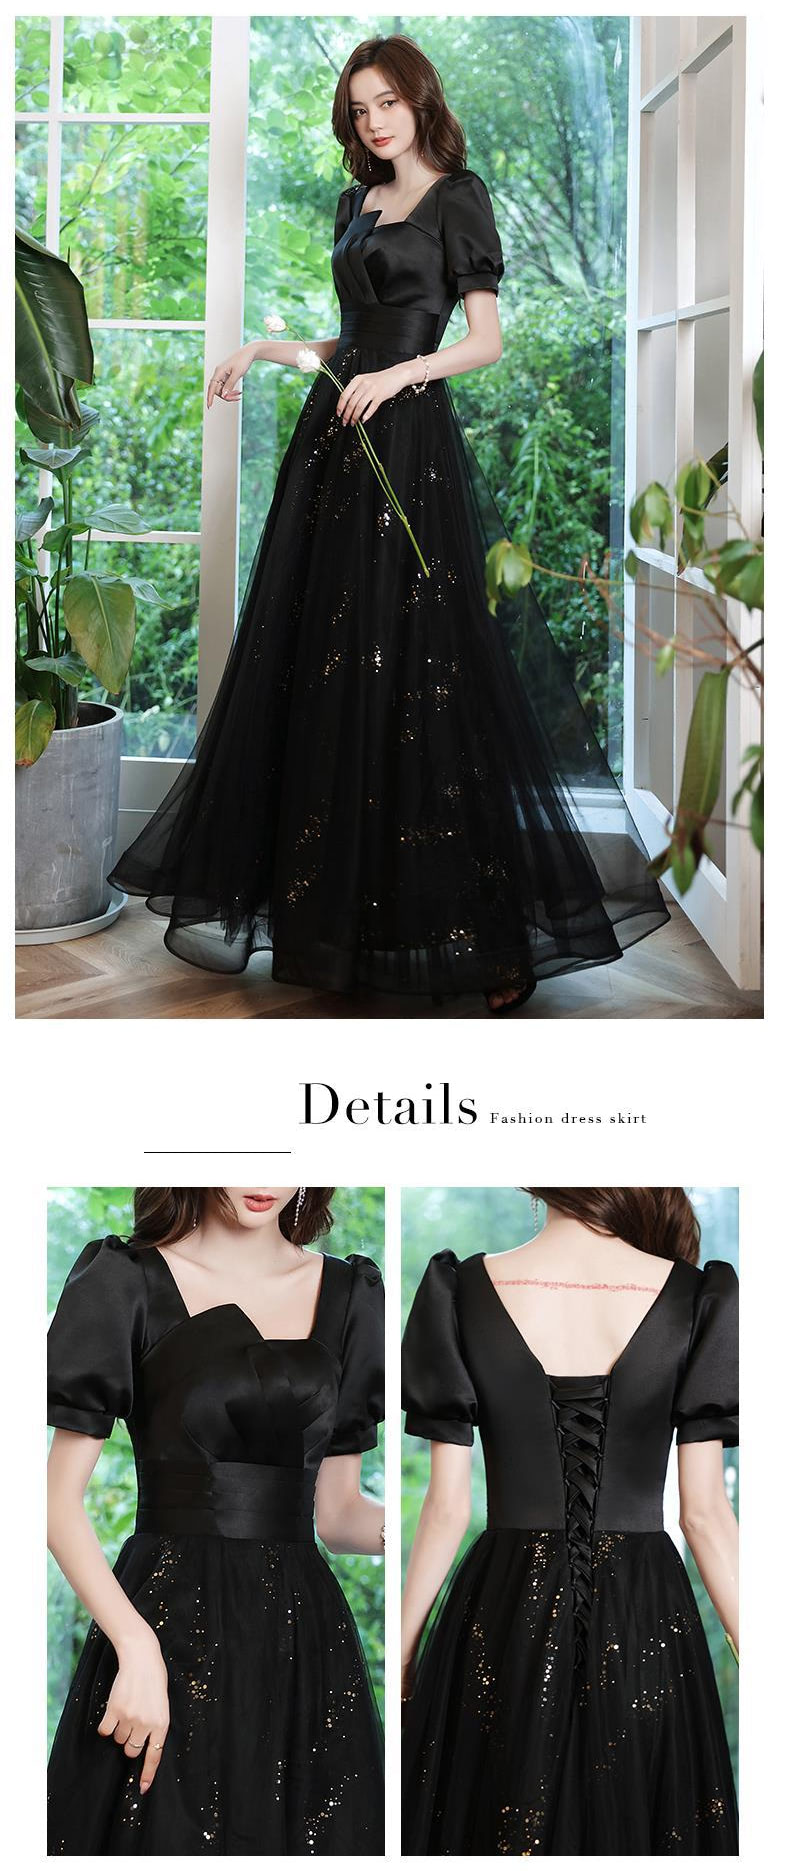 Black-Short-Sleeve-Maxi-Evening-Dress-Party-Formal-Gown13.jpg